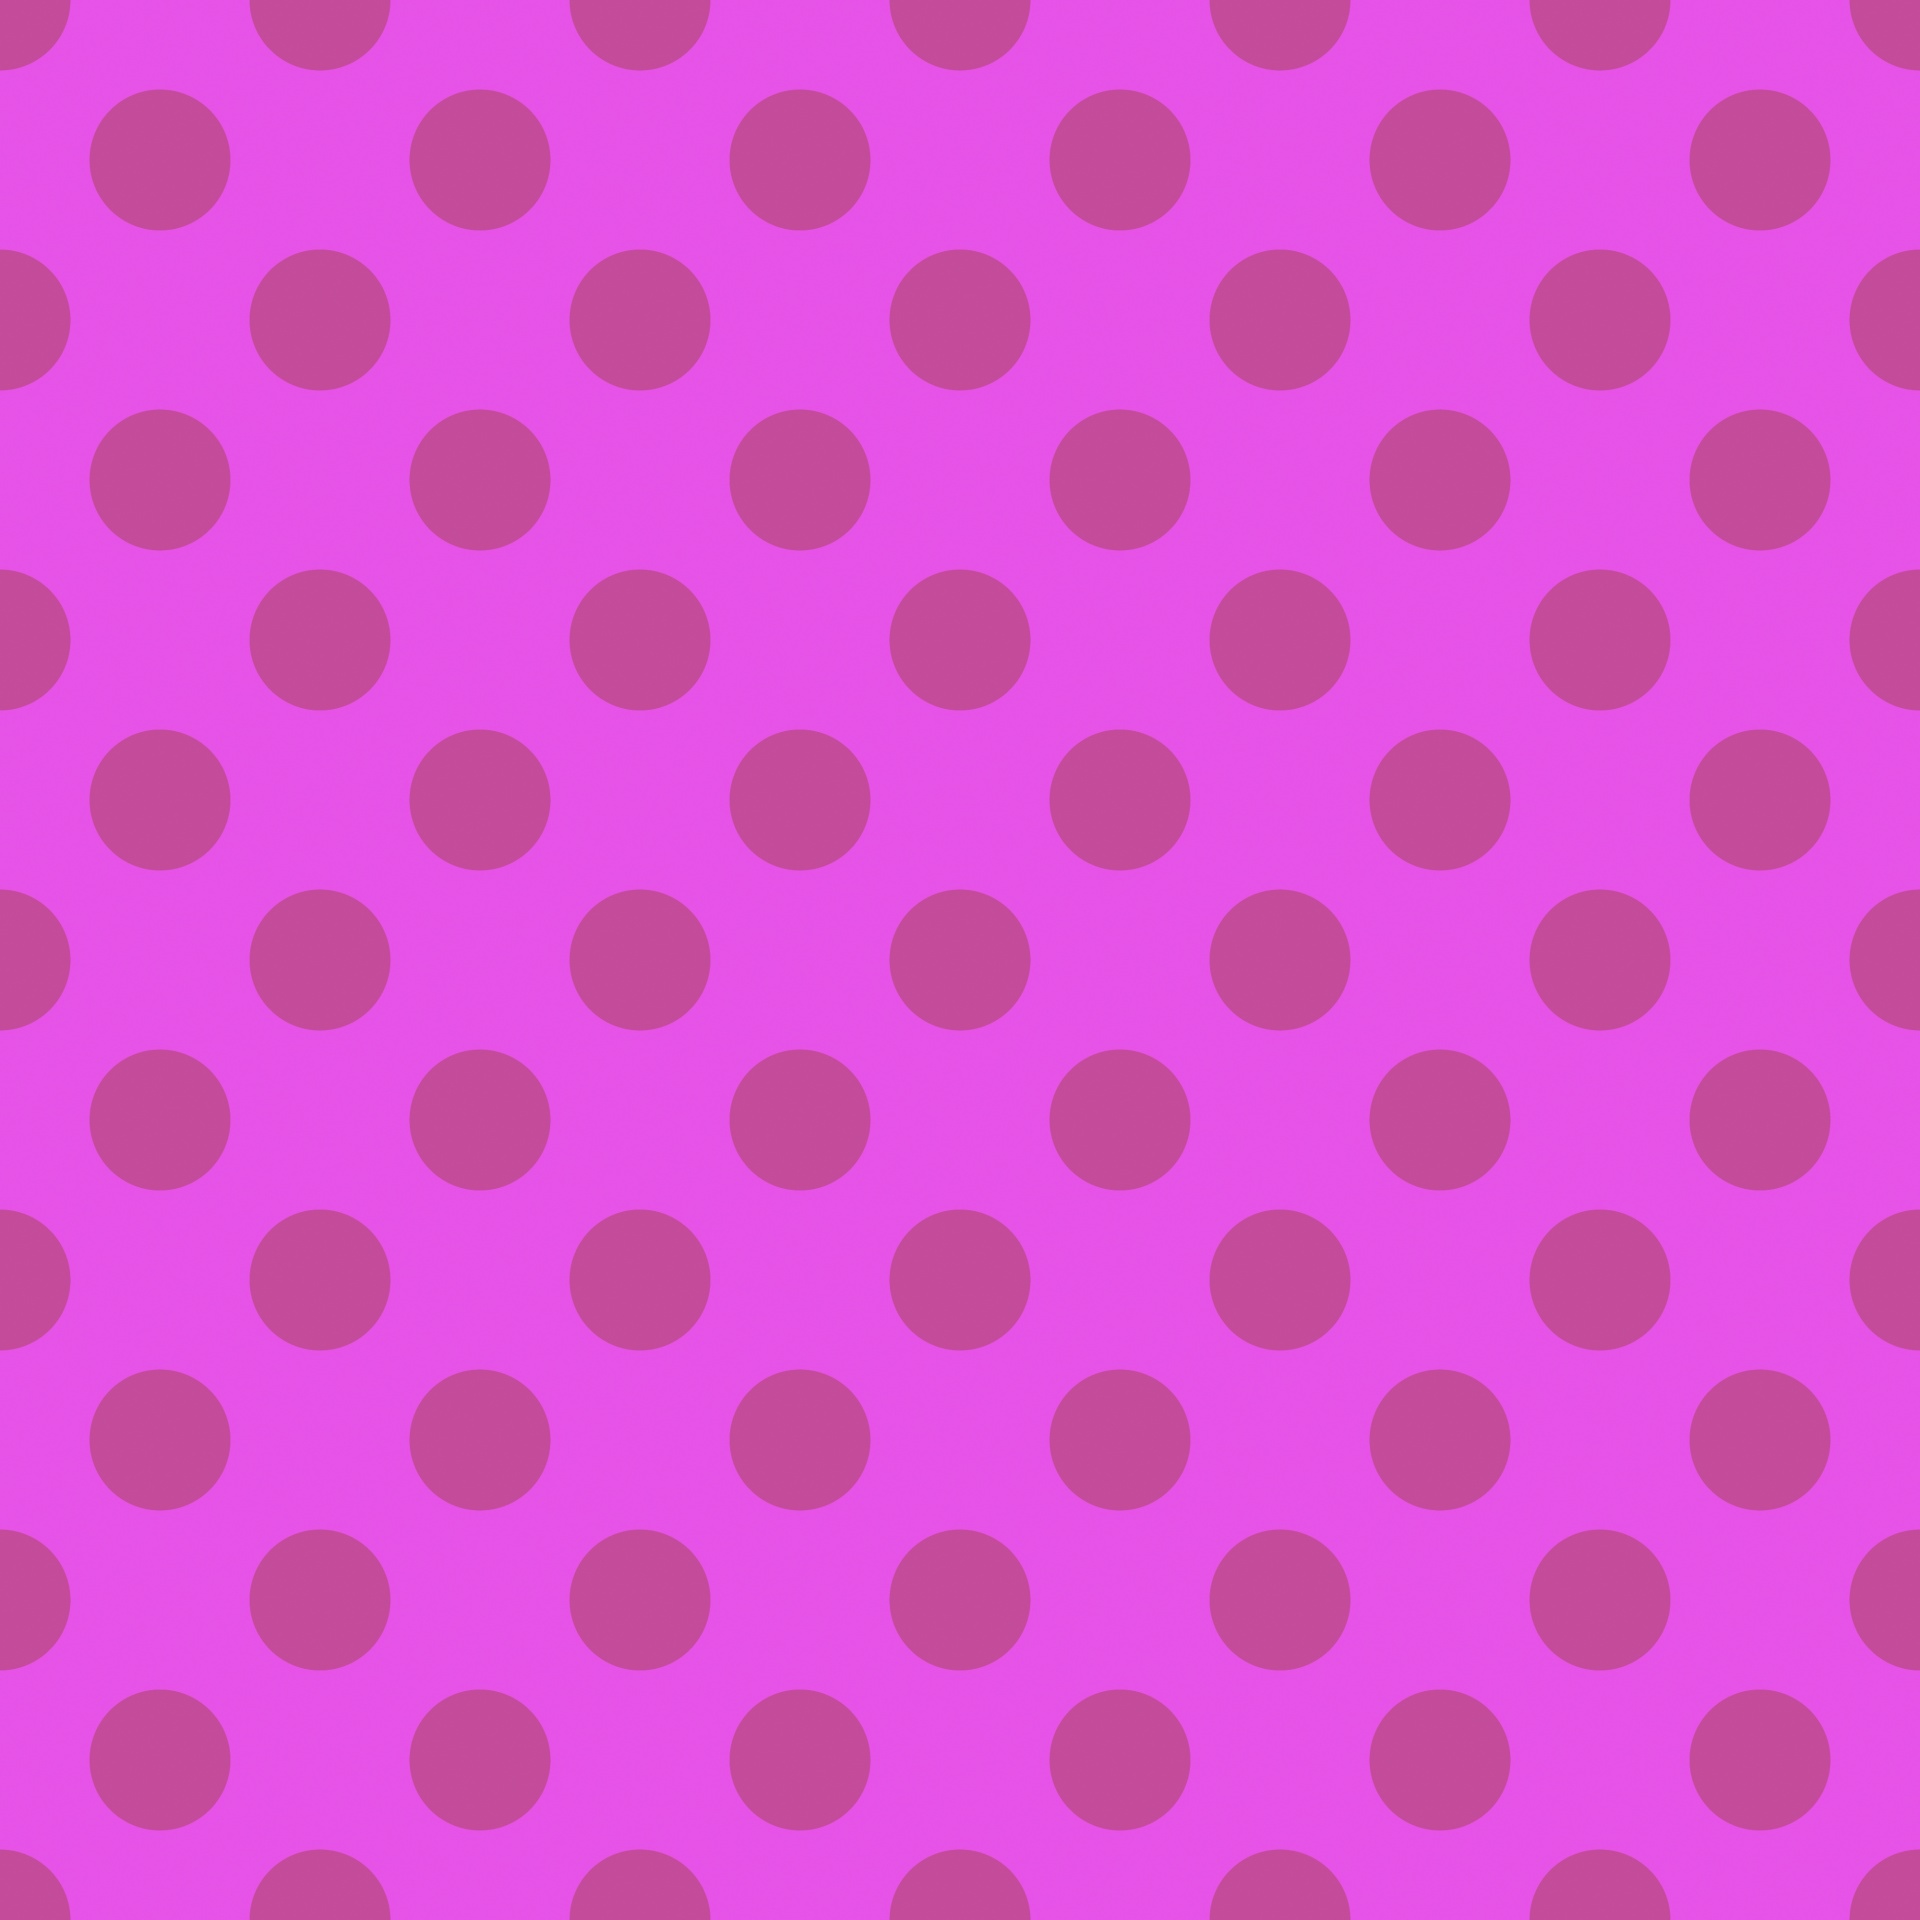 polka dots pattern polka free photo